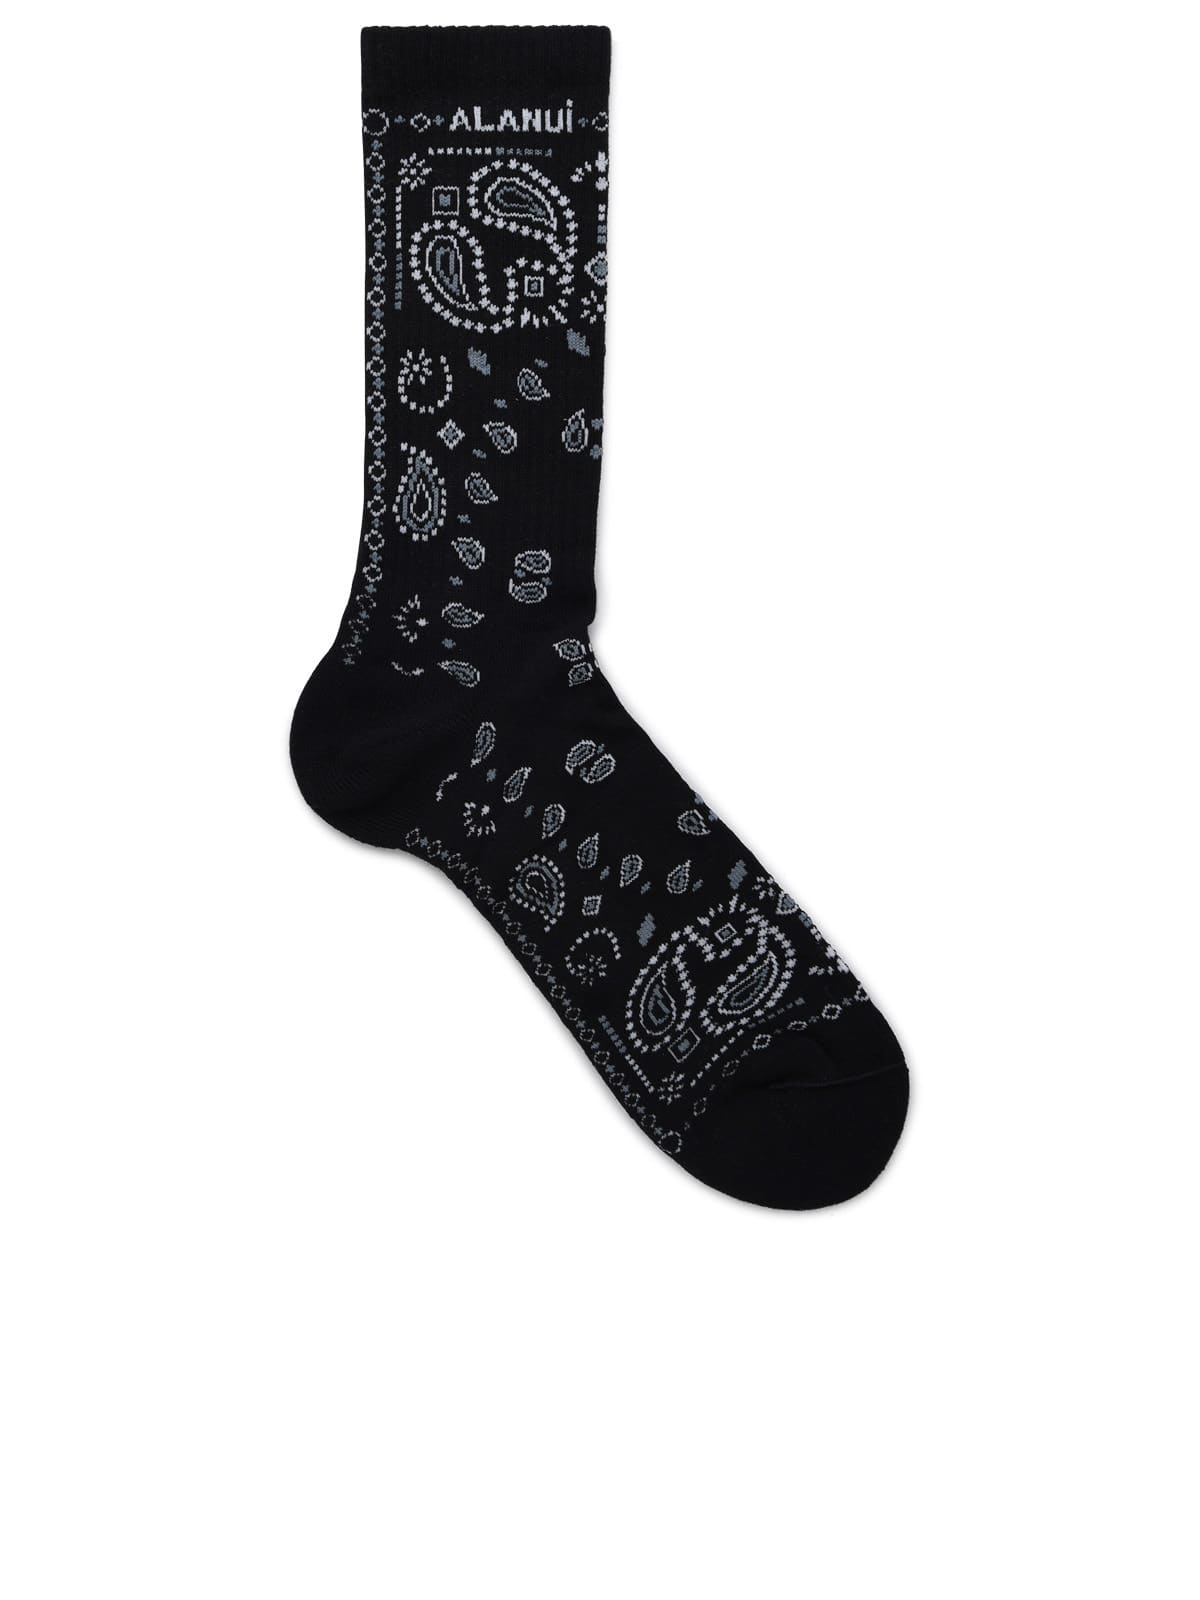 Black Cotton Socks